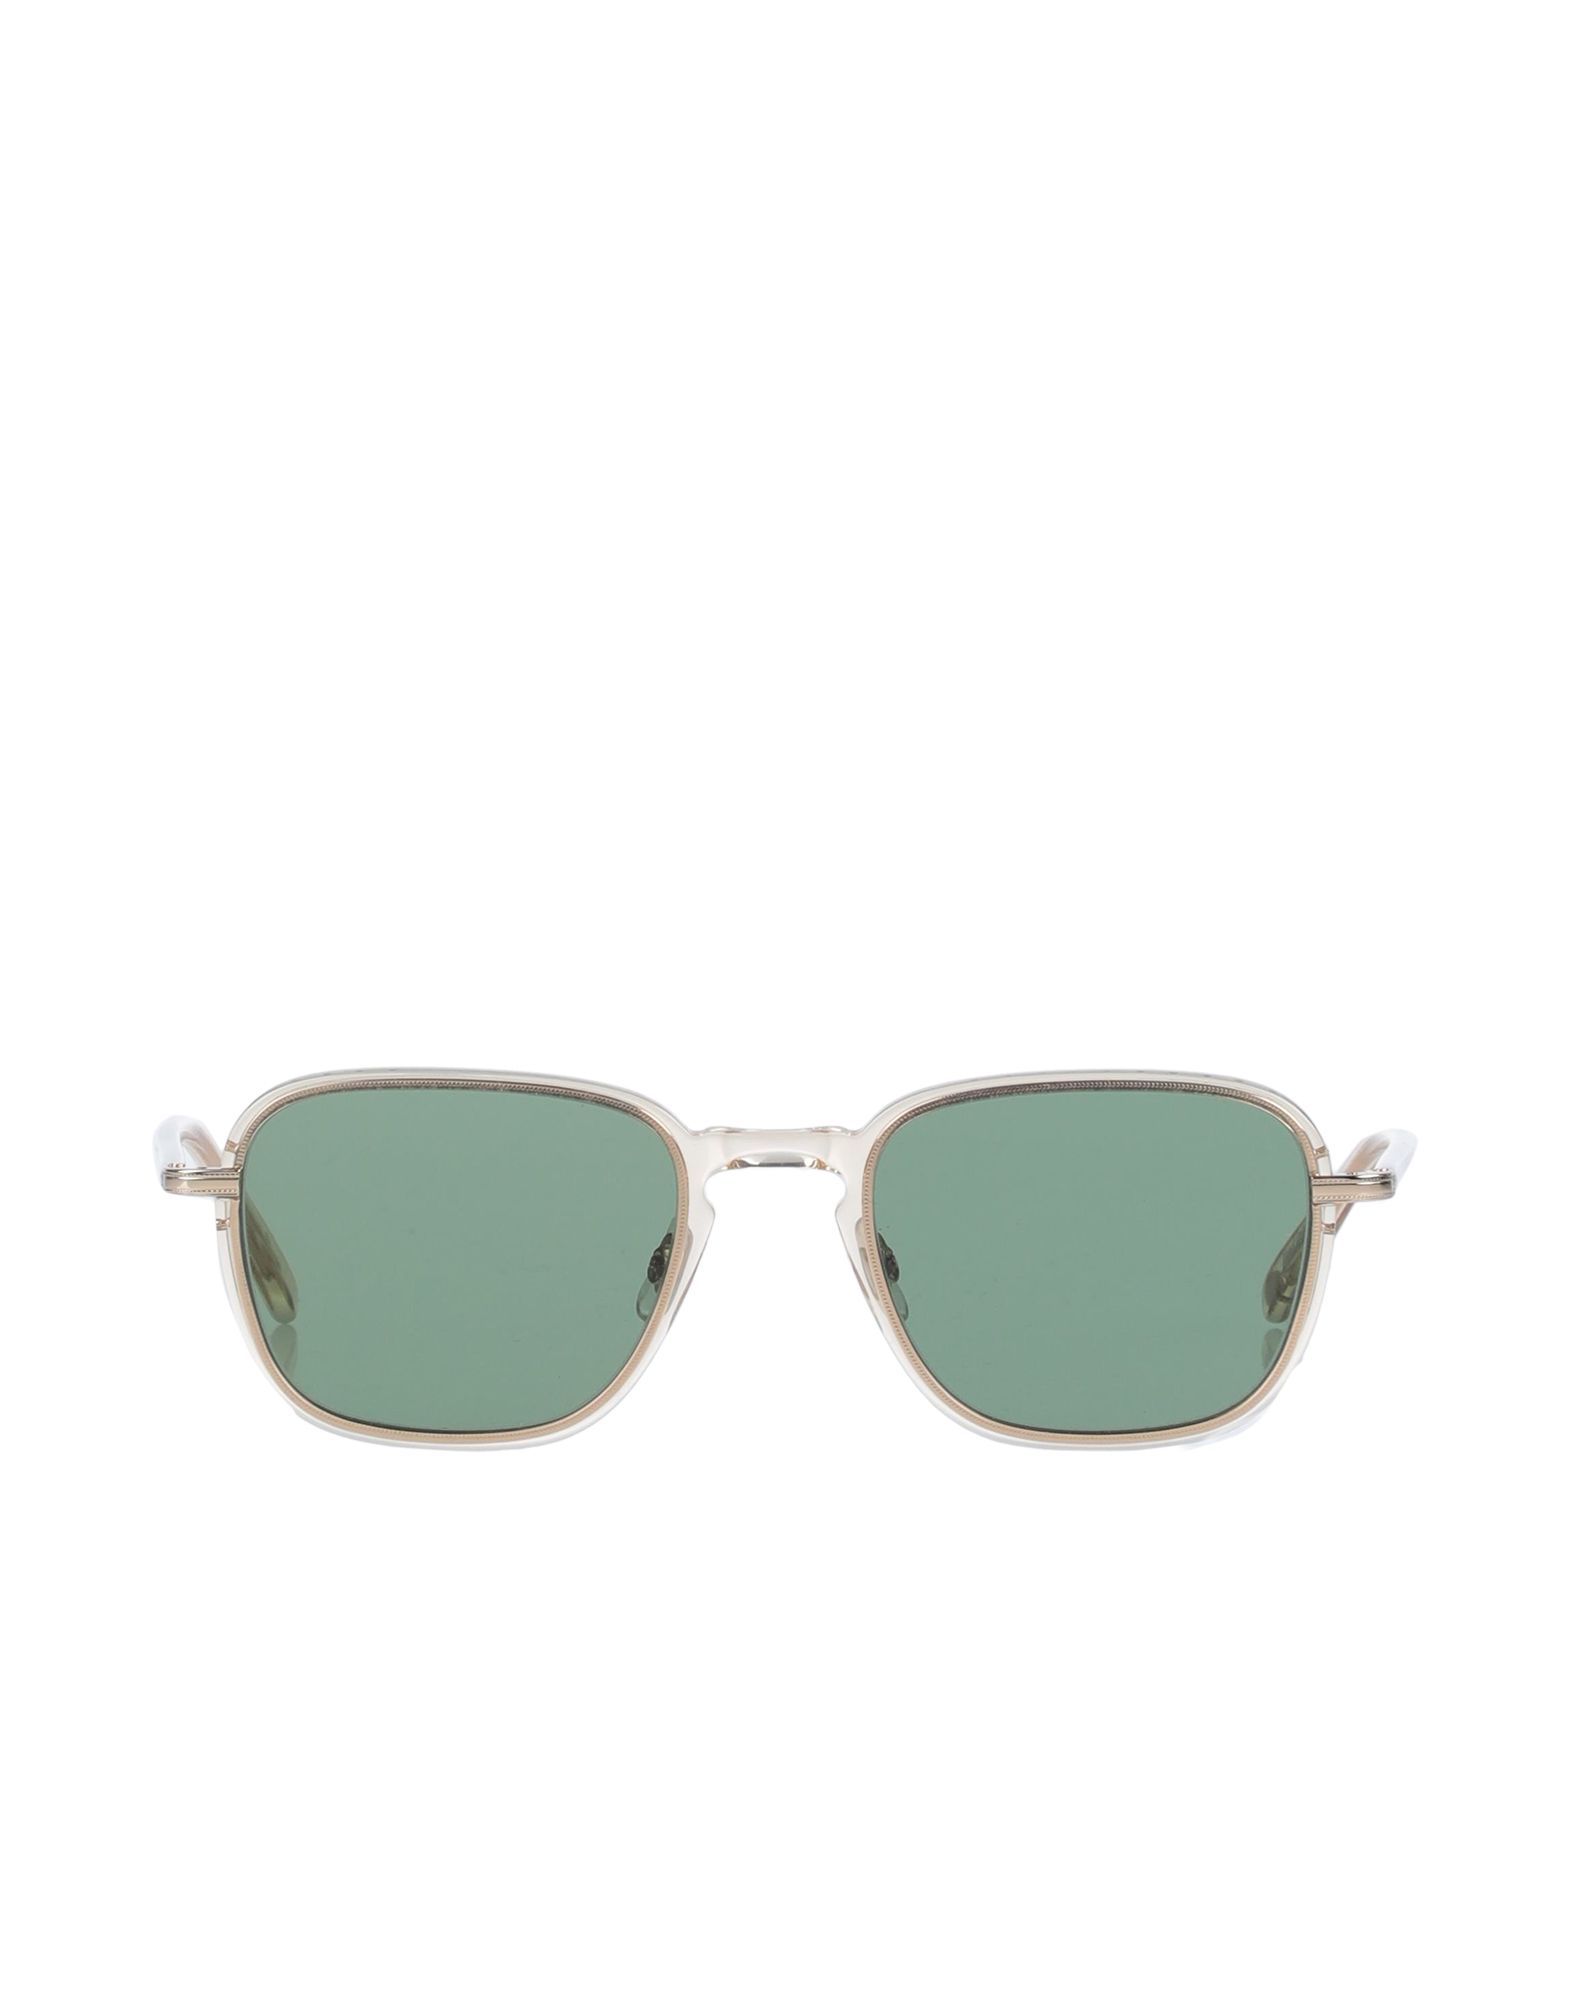 GARRETT LEIGHT CALIFORNIA OPTICAL Sunglasses - Item 46717791